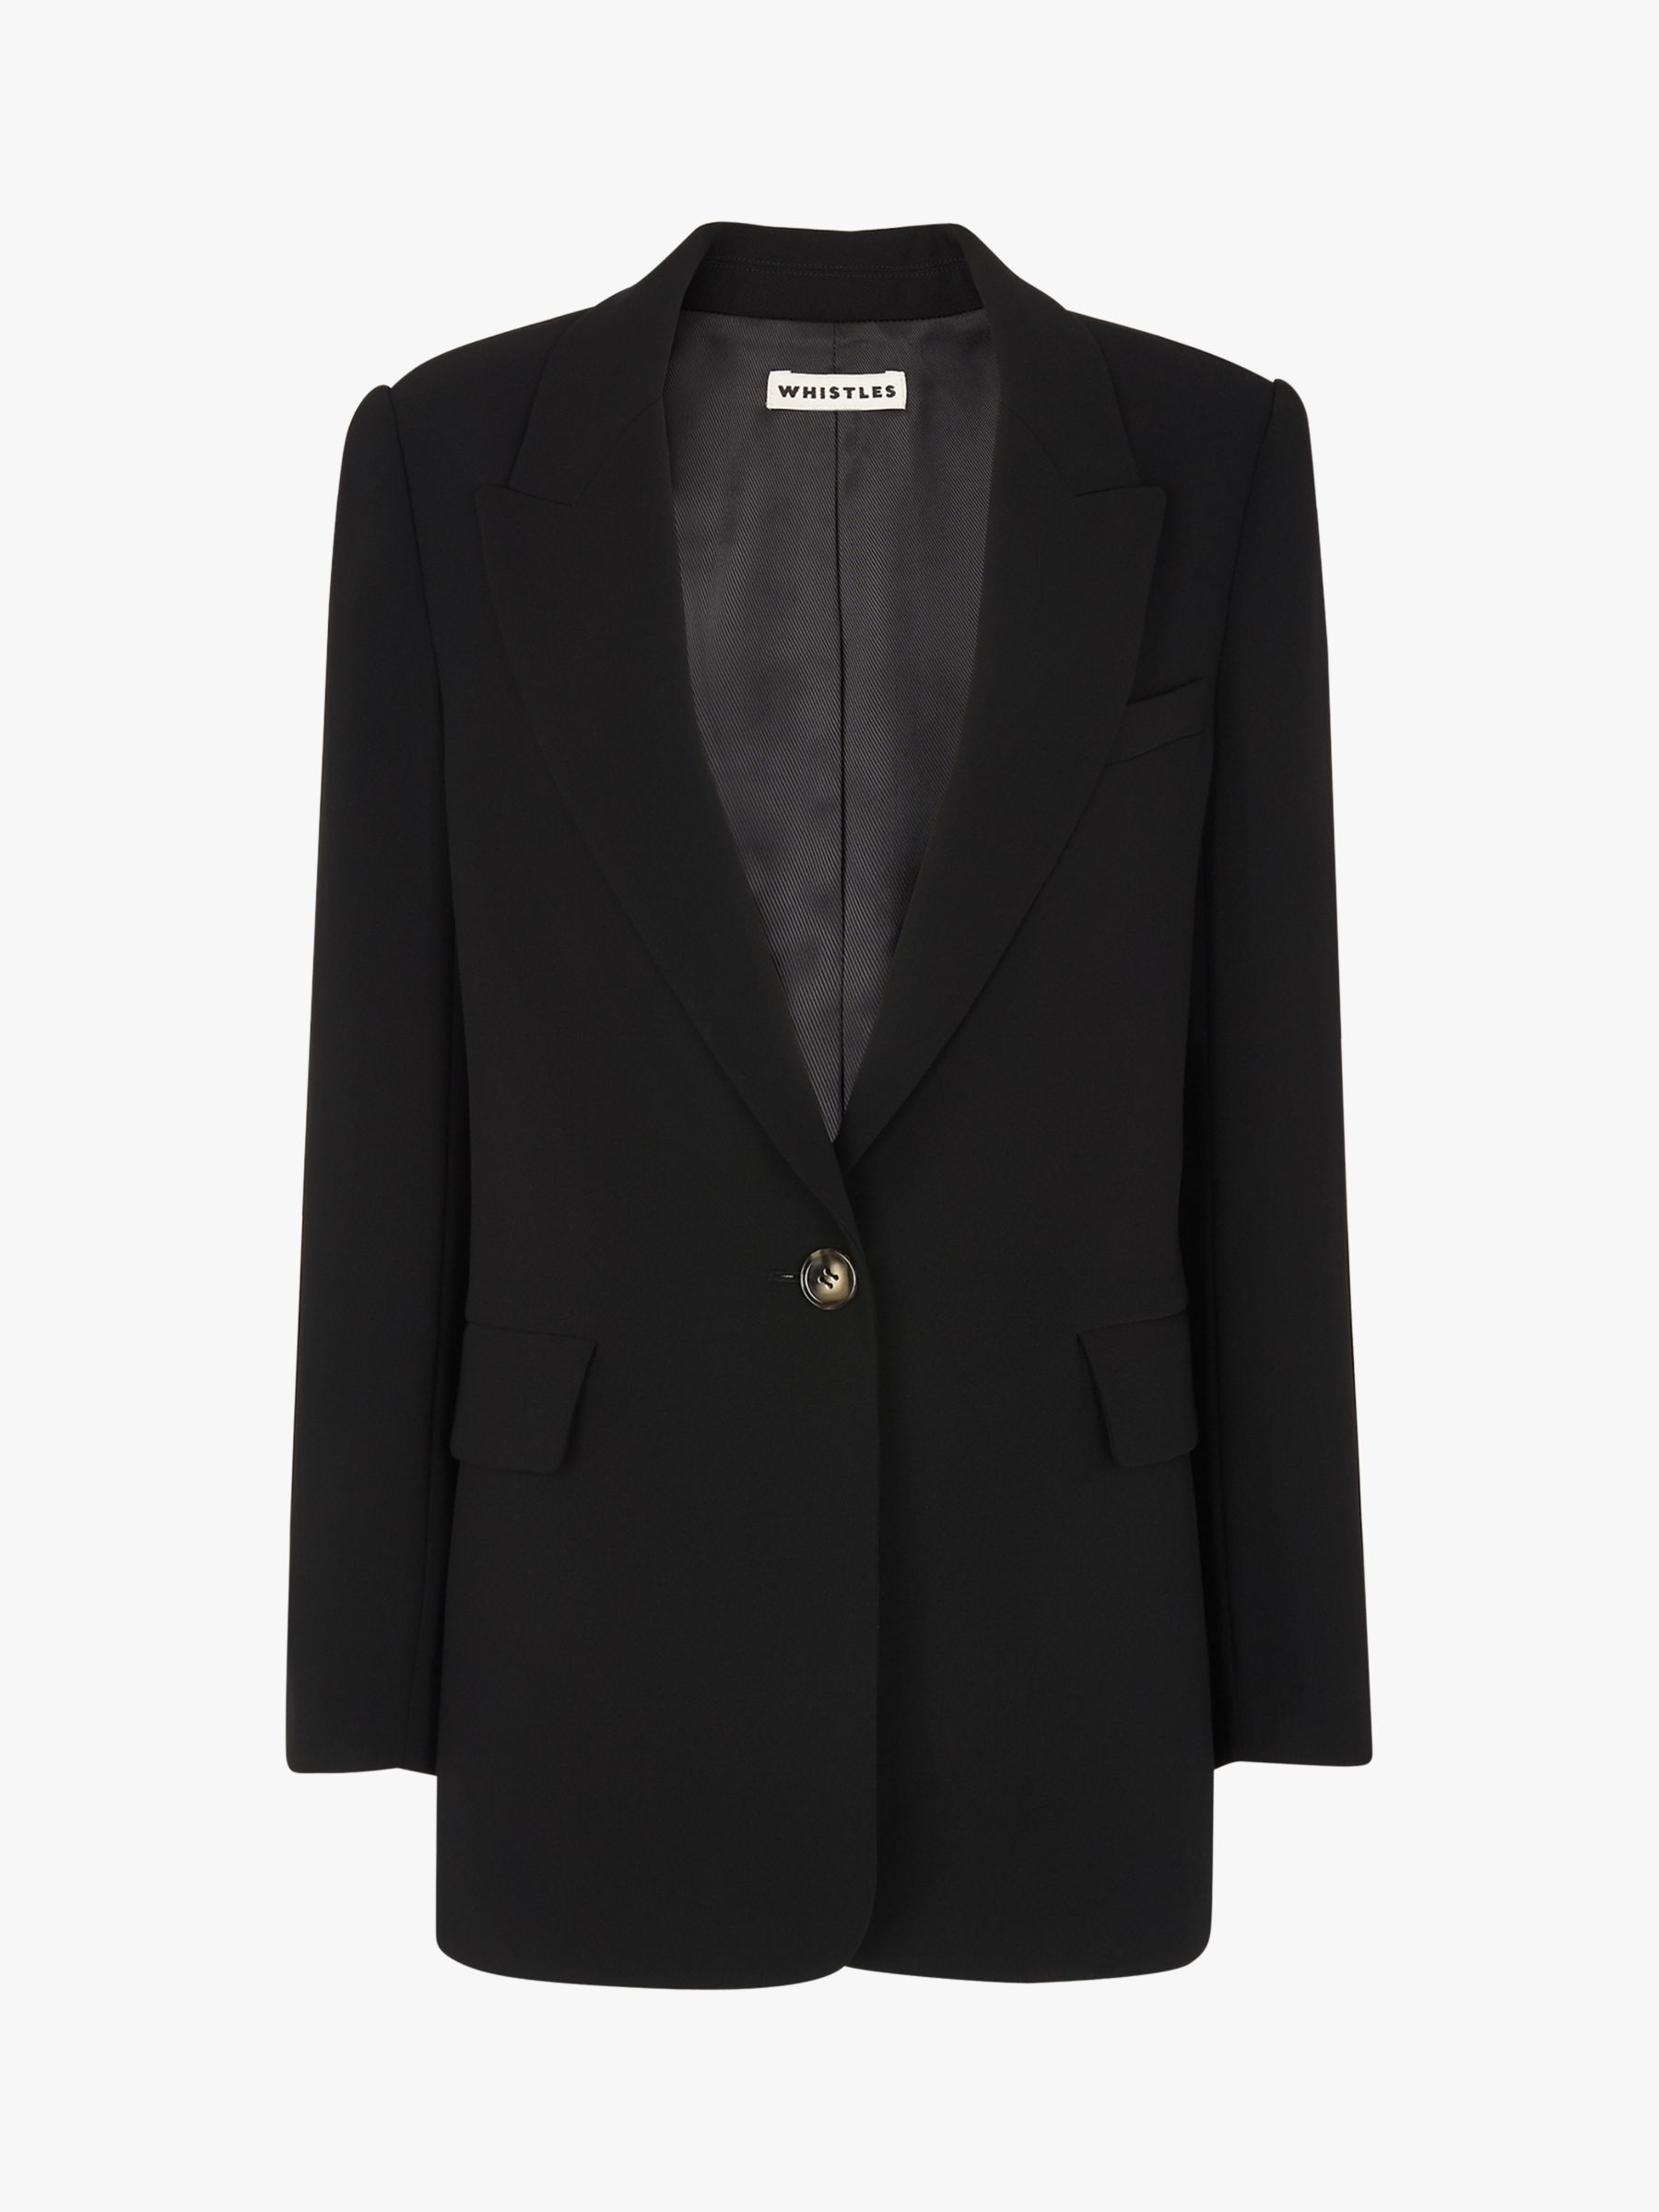 Whistles Crepe Single Buttoned Blazer, Black at John Lewis & Partners